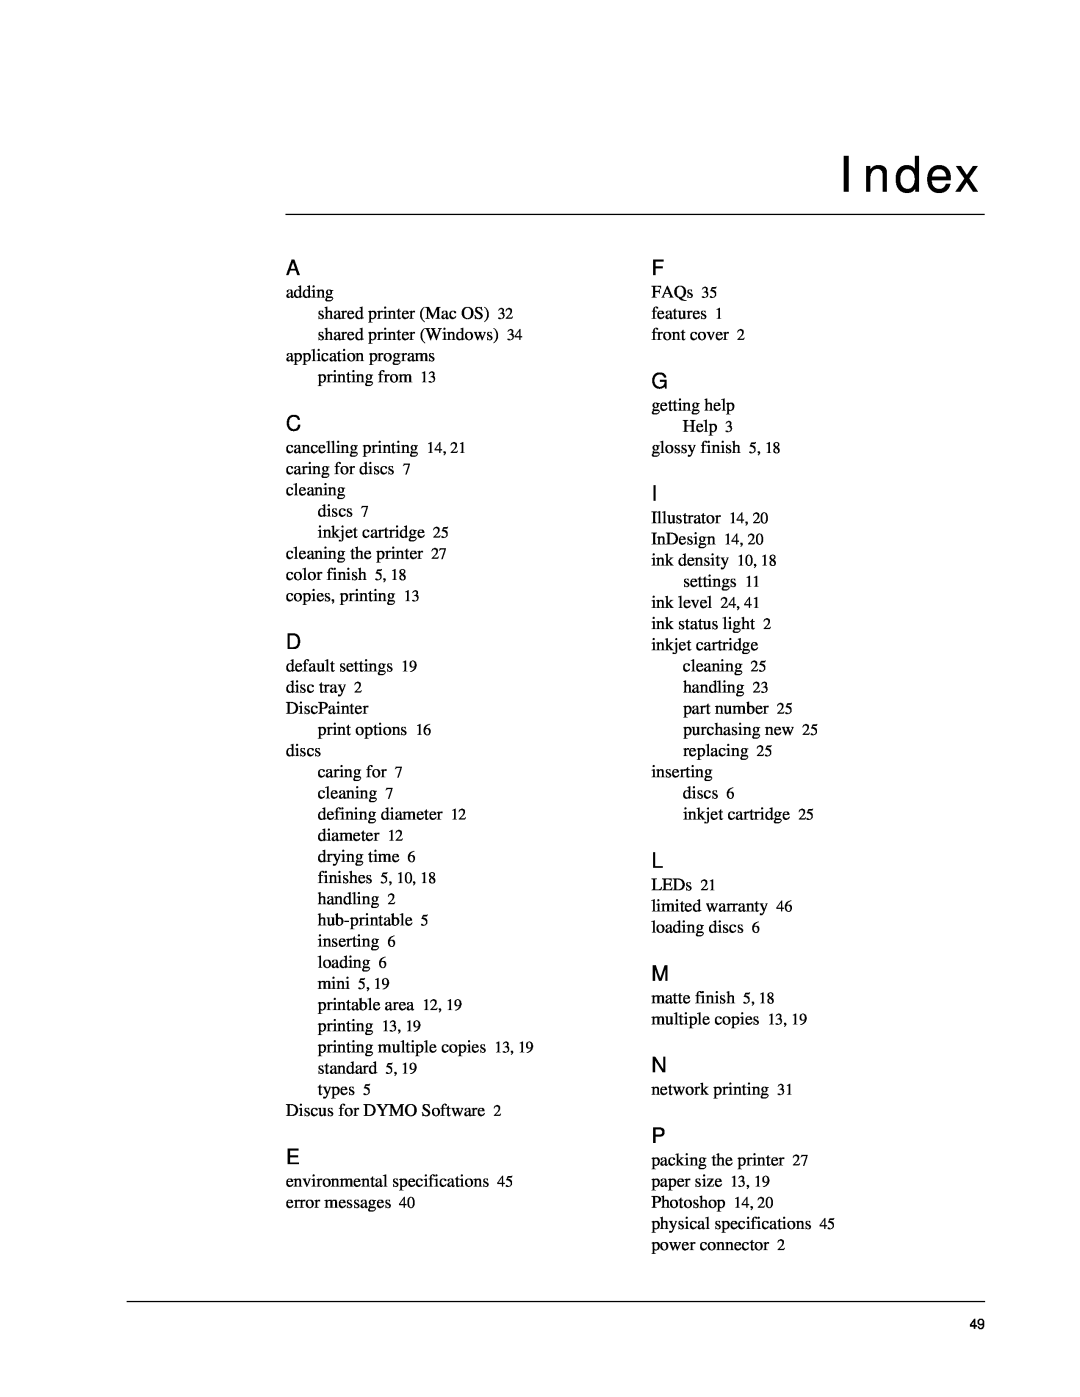 Dymo DiscPainter manual Index 